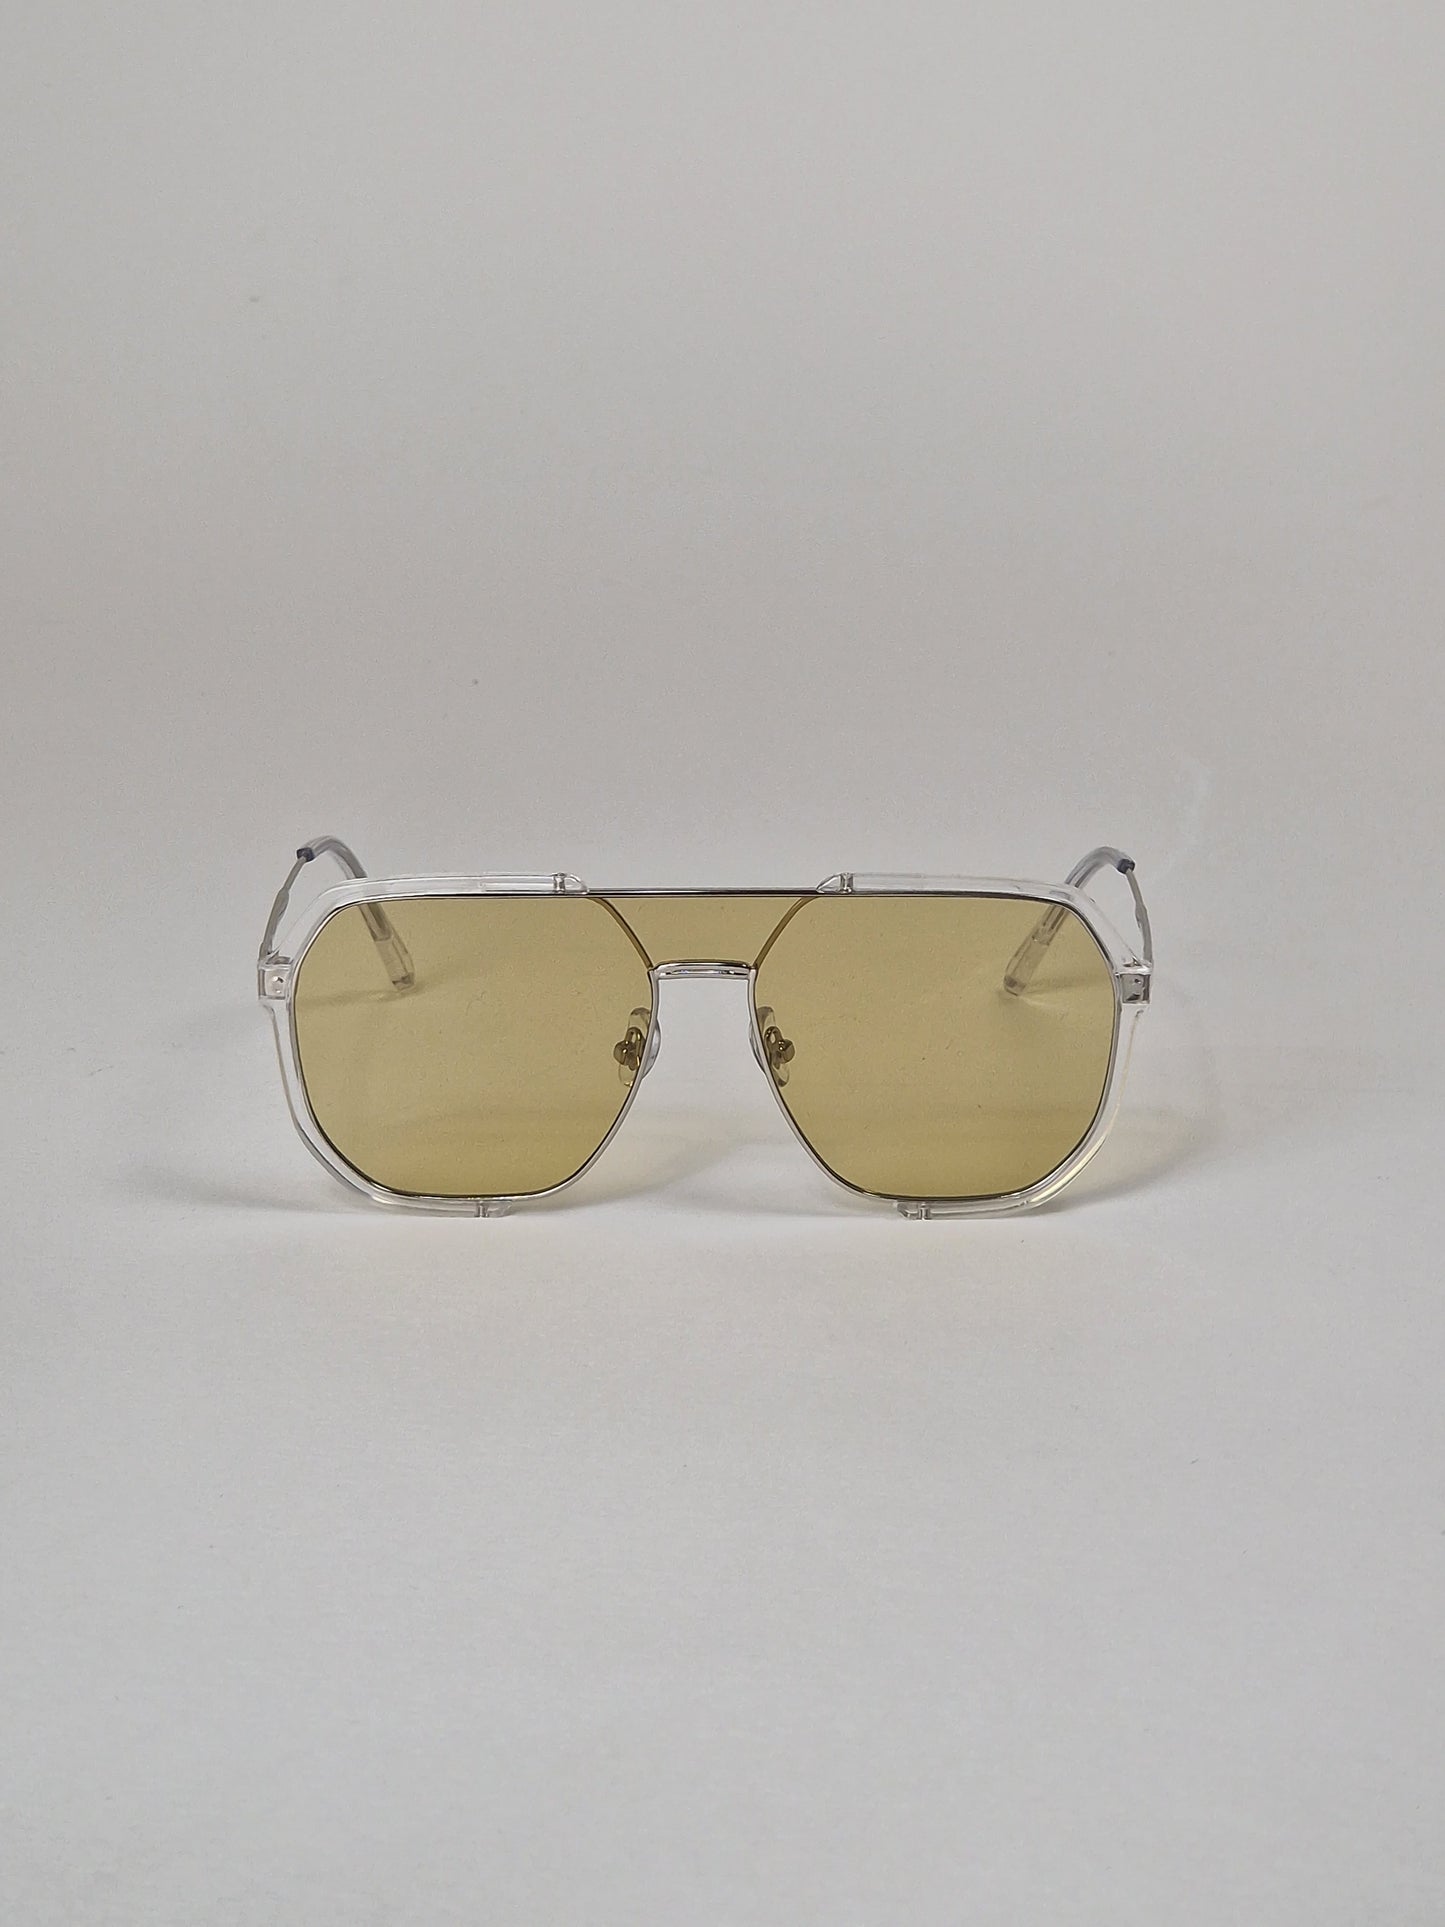 Sunglasses, model 21 - Yellow tinted.